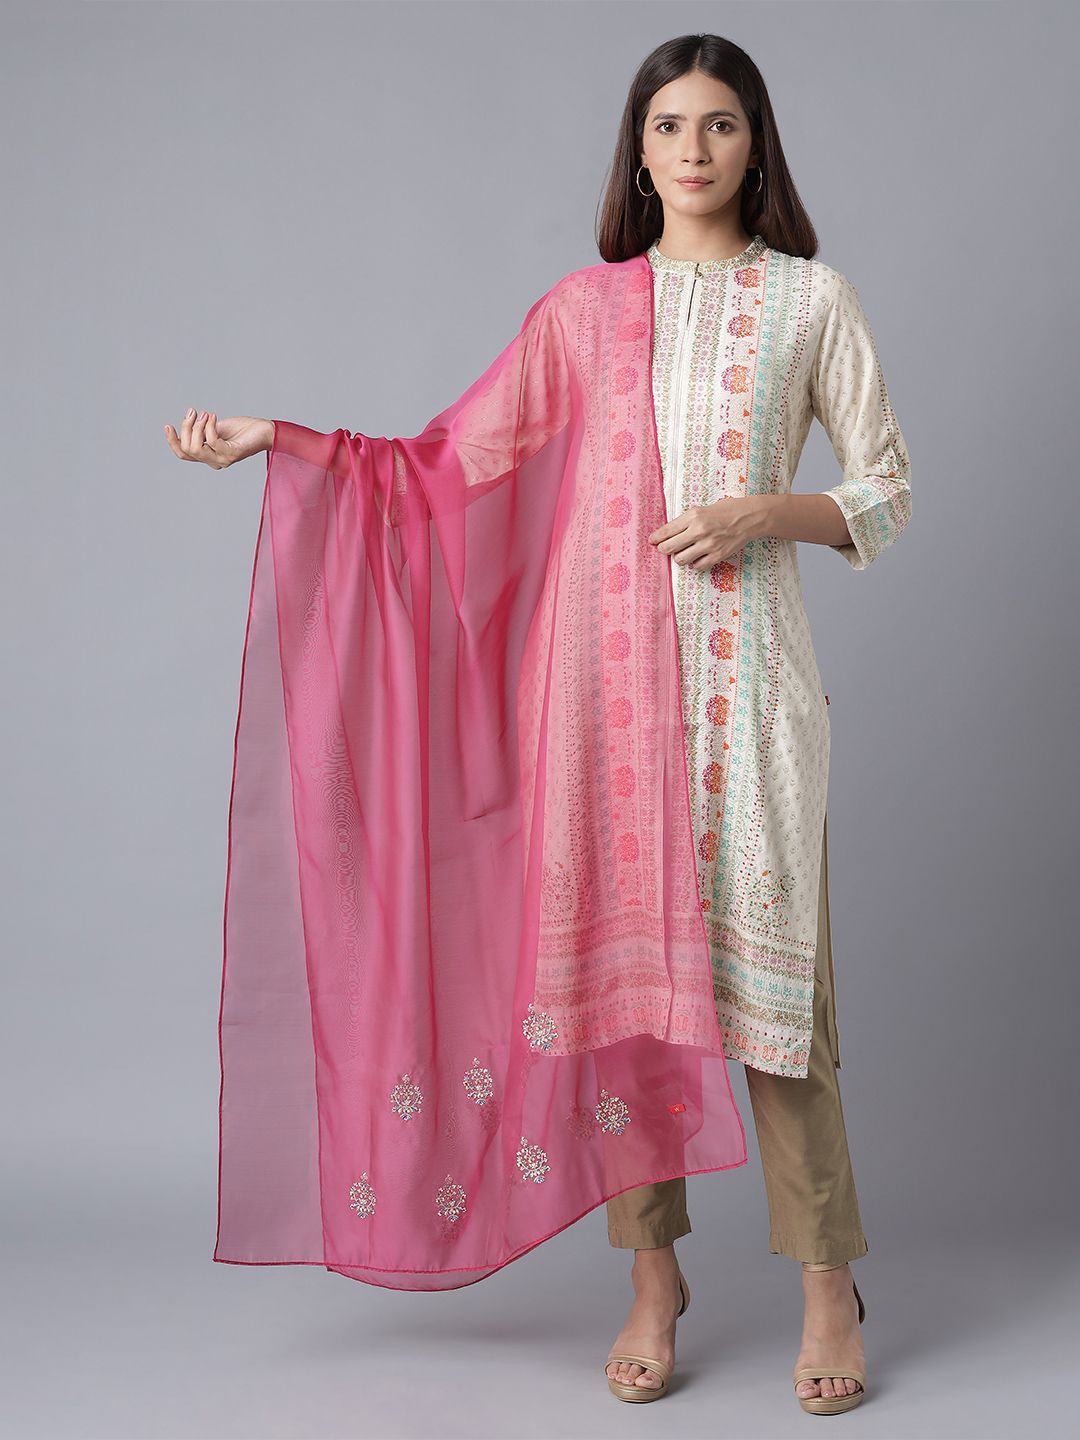 W Pink Ethnic Motifs Embroidered Organza Dupatta Price in India